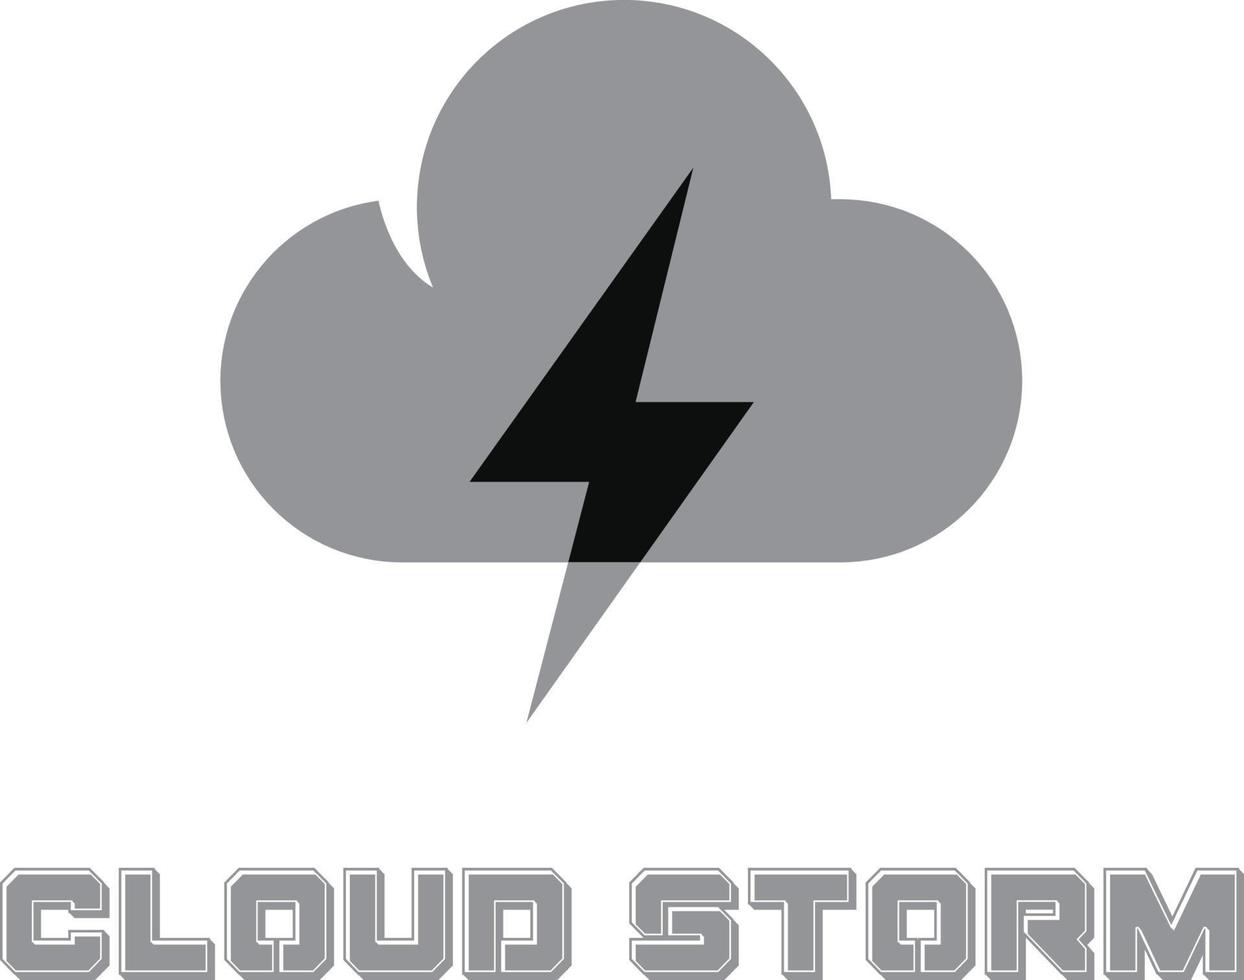 Wolke Sturm Logo Vektor Datei